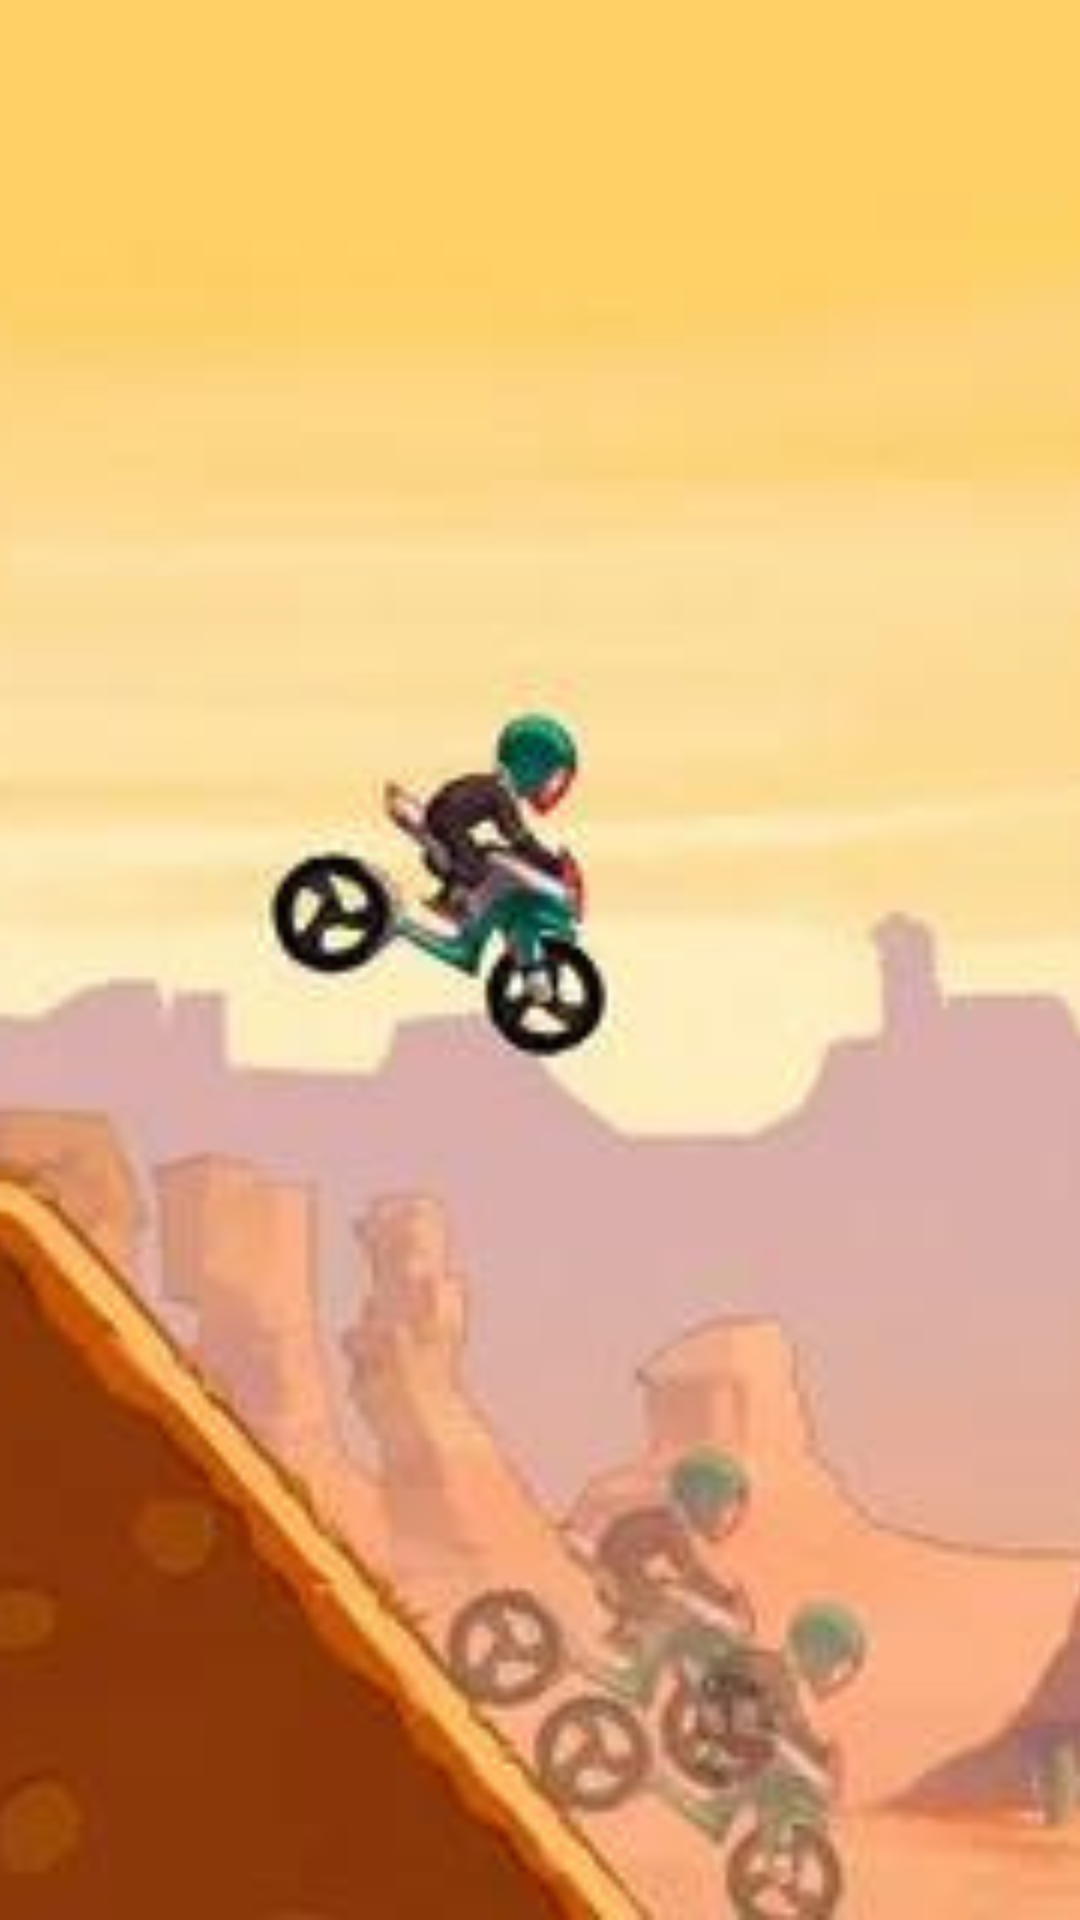 Moto Bike Mini Race Game - Unity Source Code